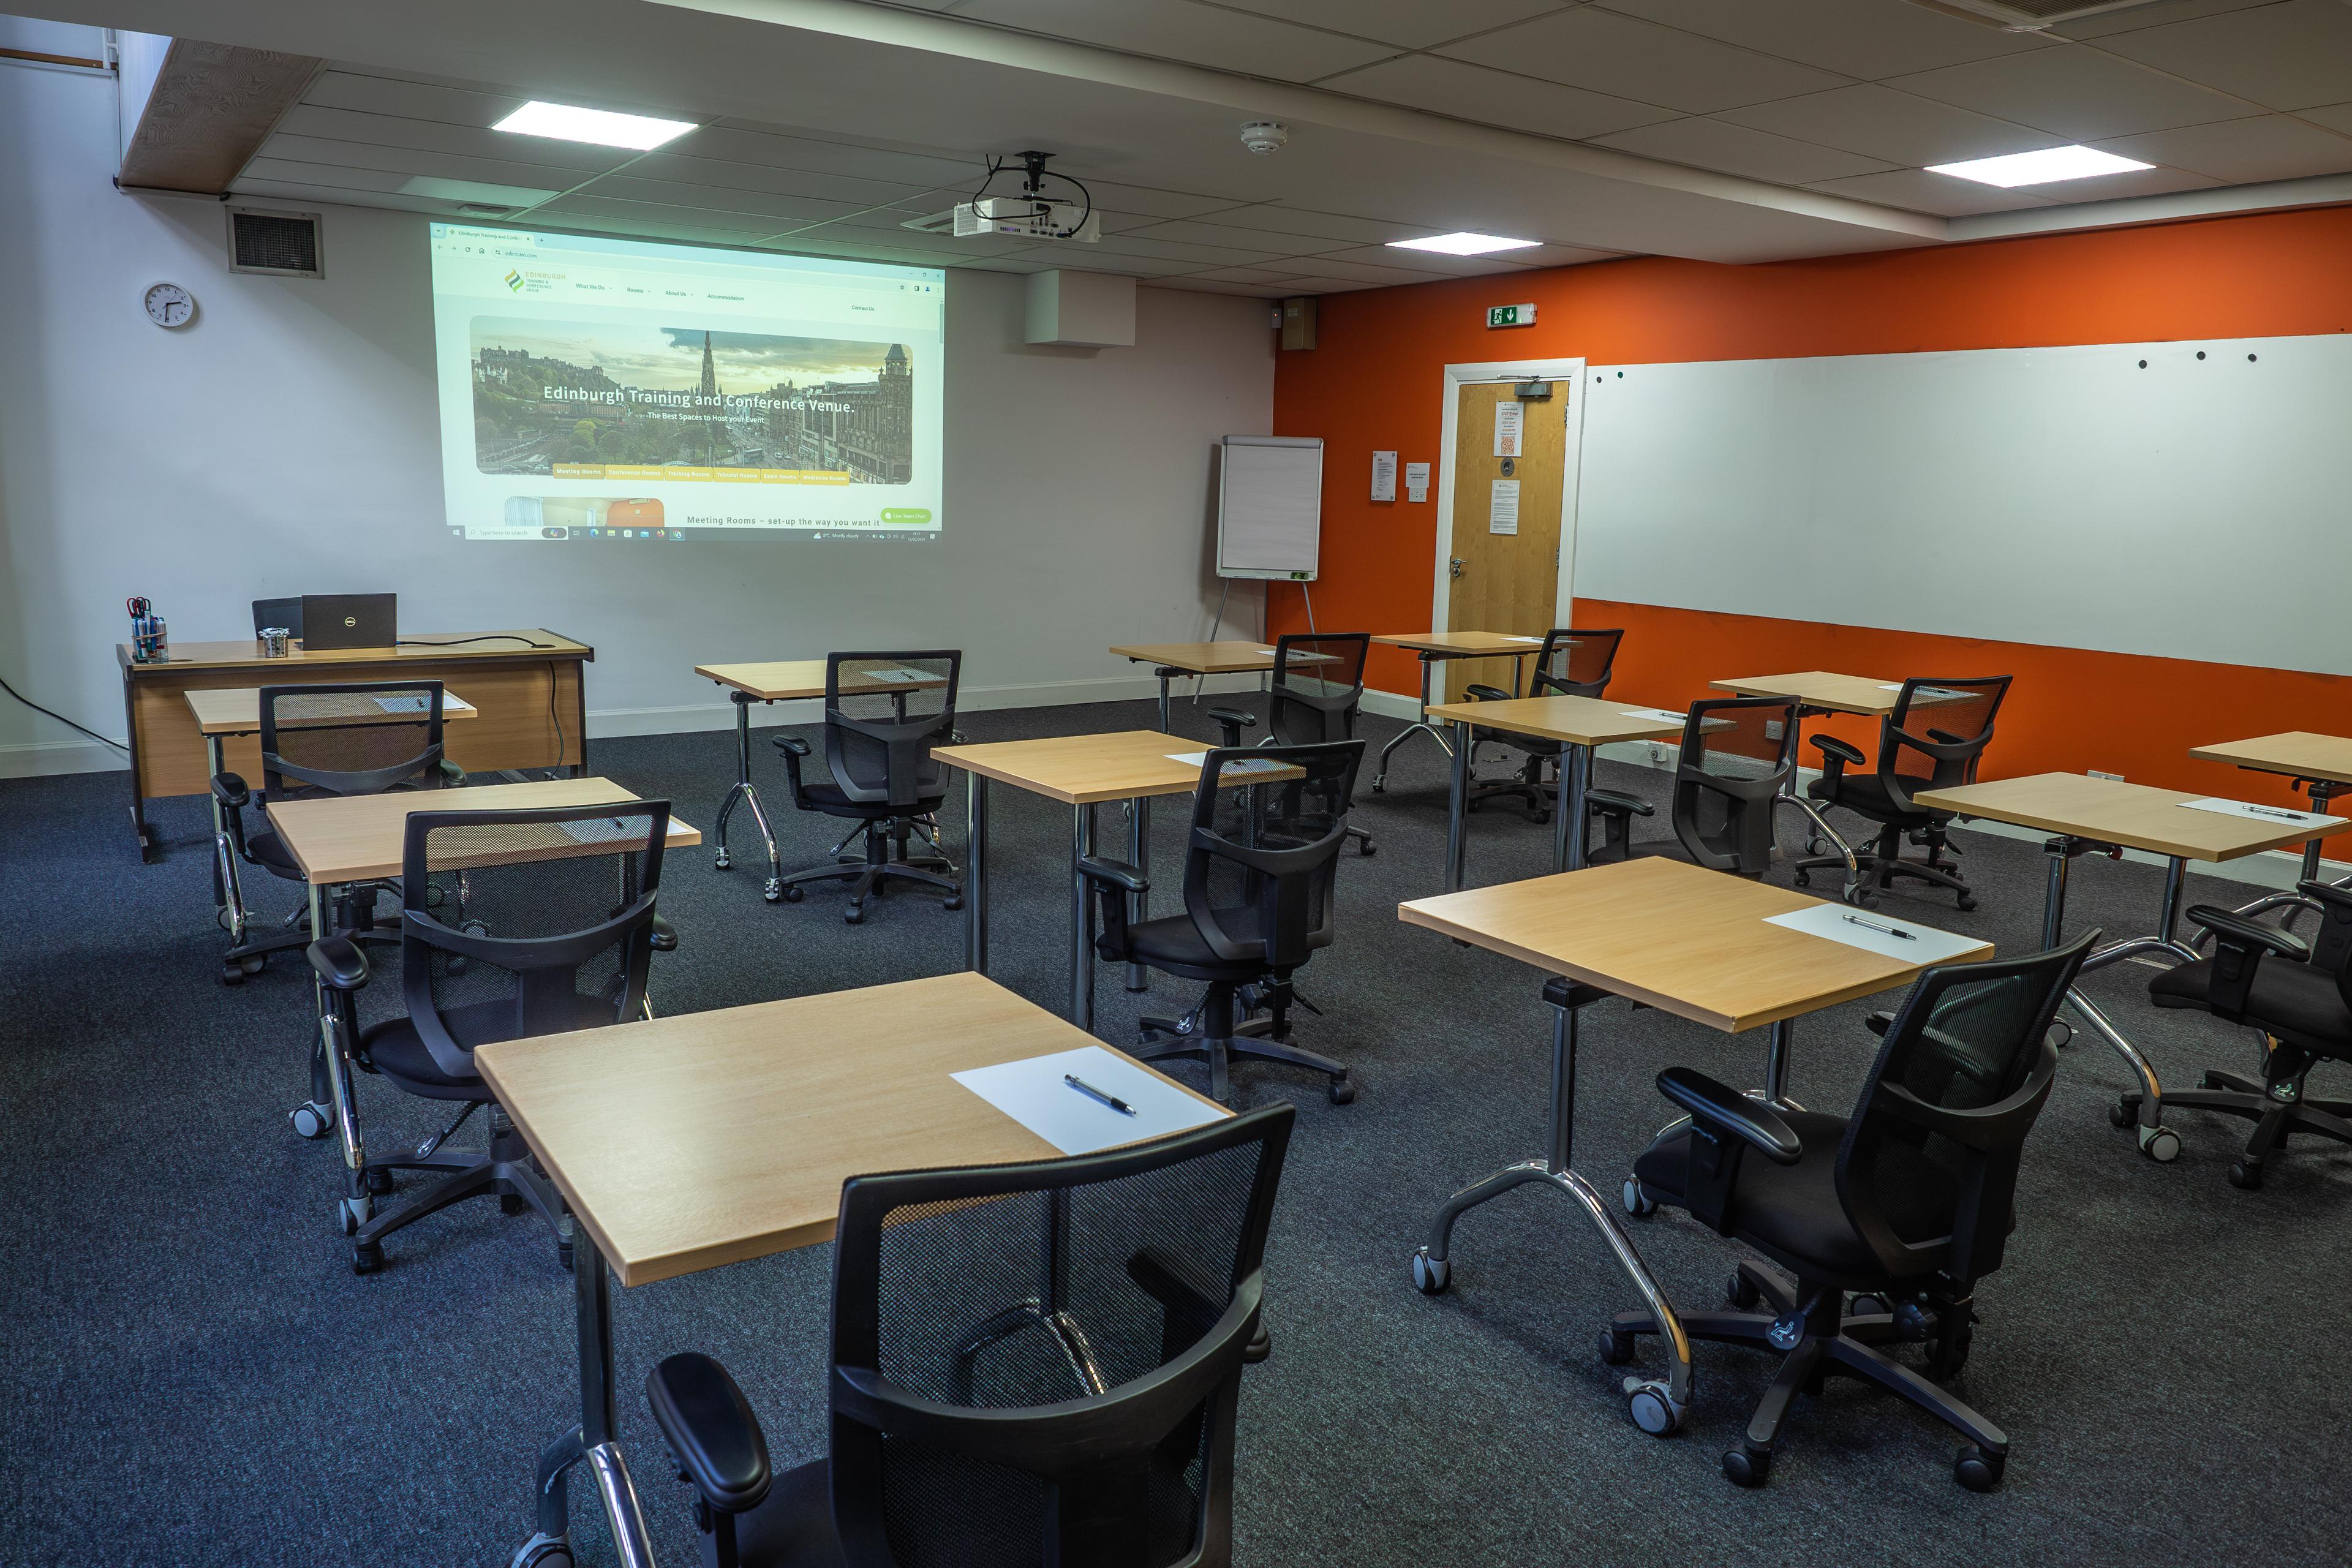 Exam Rooms, Edinburgh Training And Conference Venue photo #2